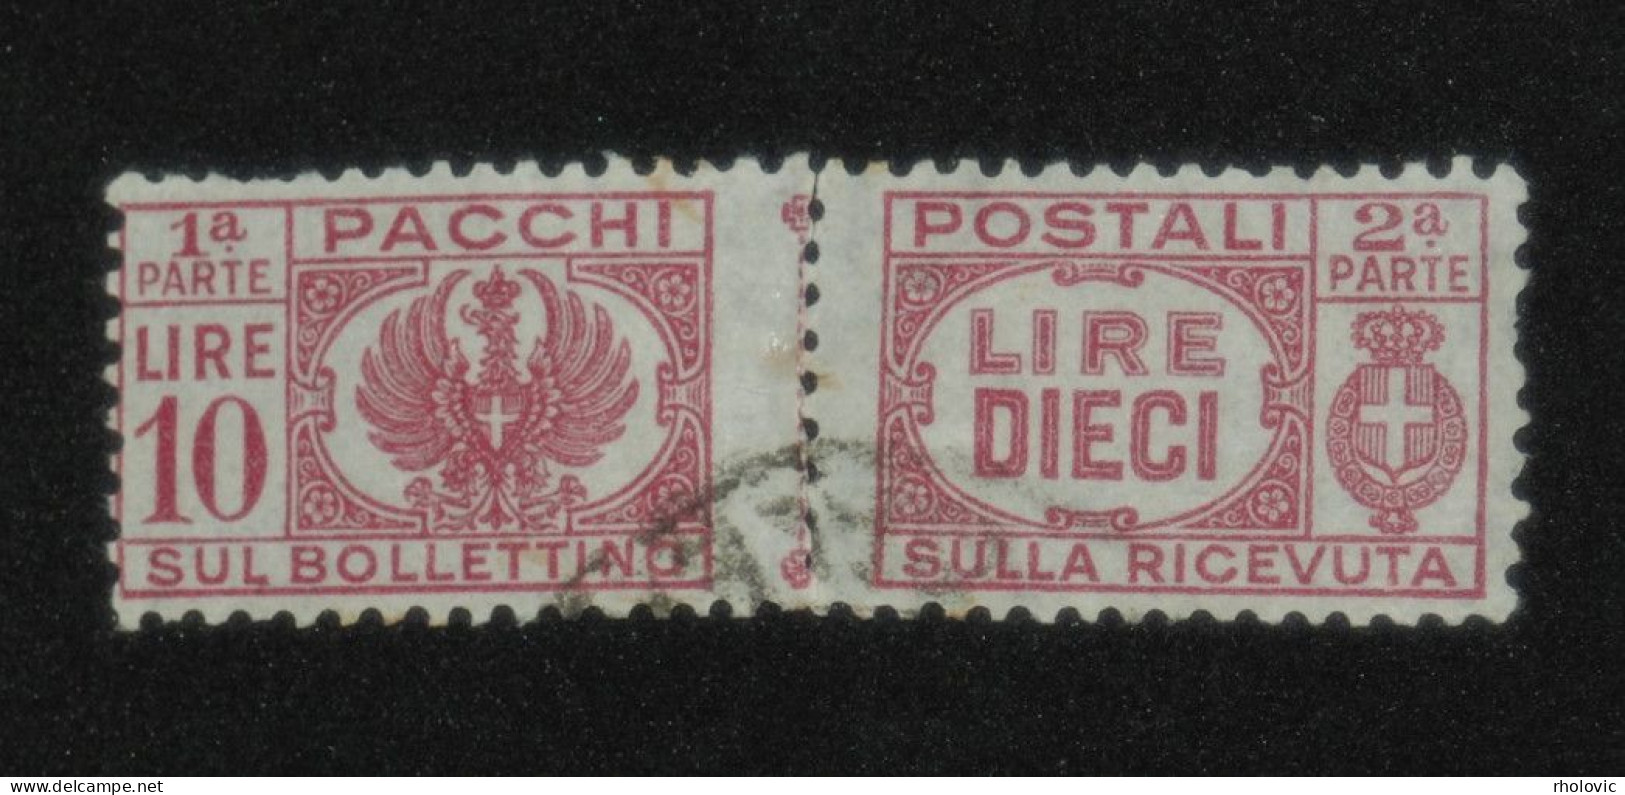 ITALY 1946, Parcel, 10 Lire, Lilac, Mi #P64, Used, CV: €120 - Pacchi Postali